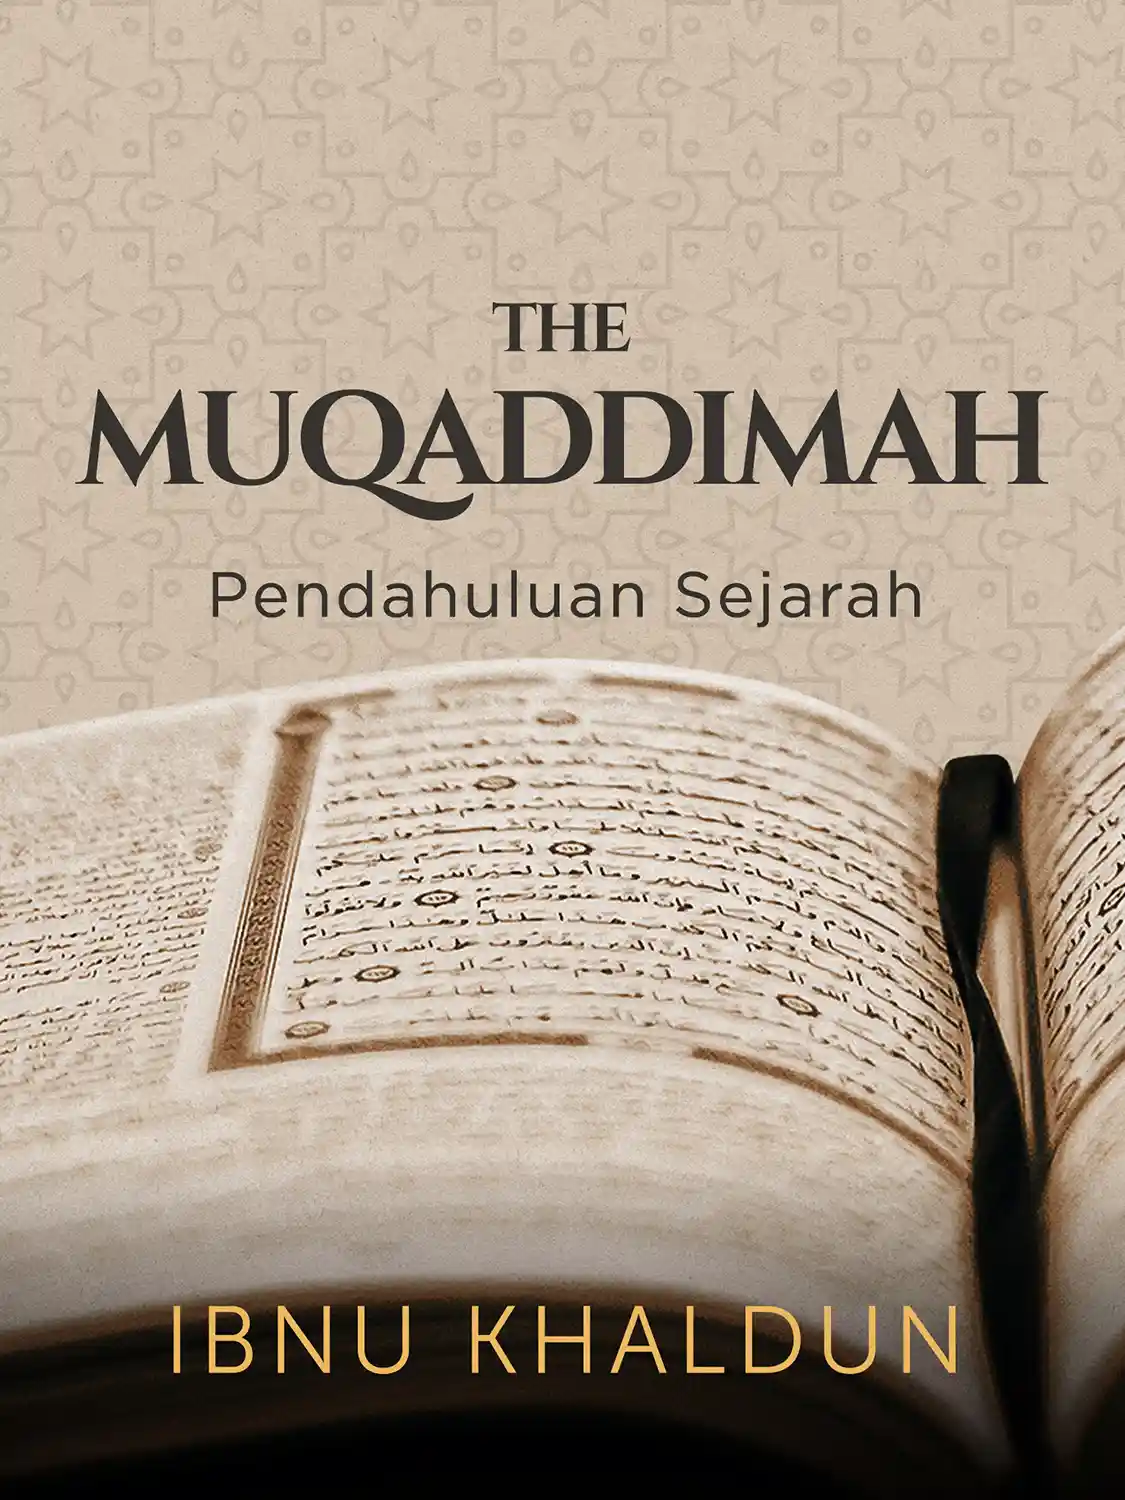 #5 Beberapa orang tertentu dipilih Tuhan untuk menjadi nabi-Nya, dan yang terhebat adalah Muhammad.